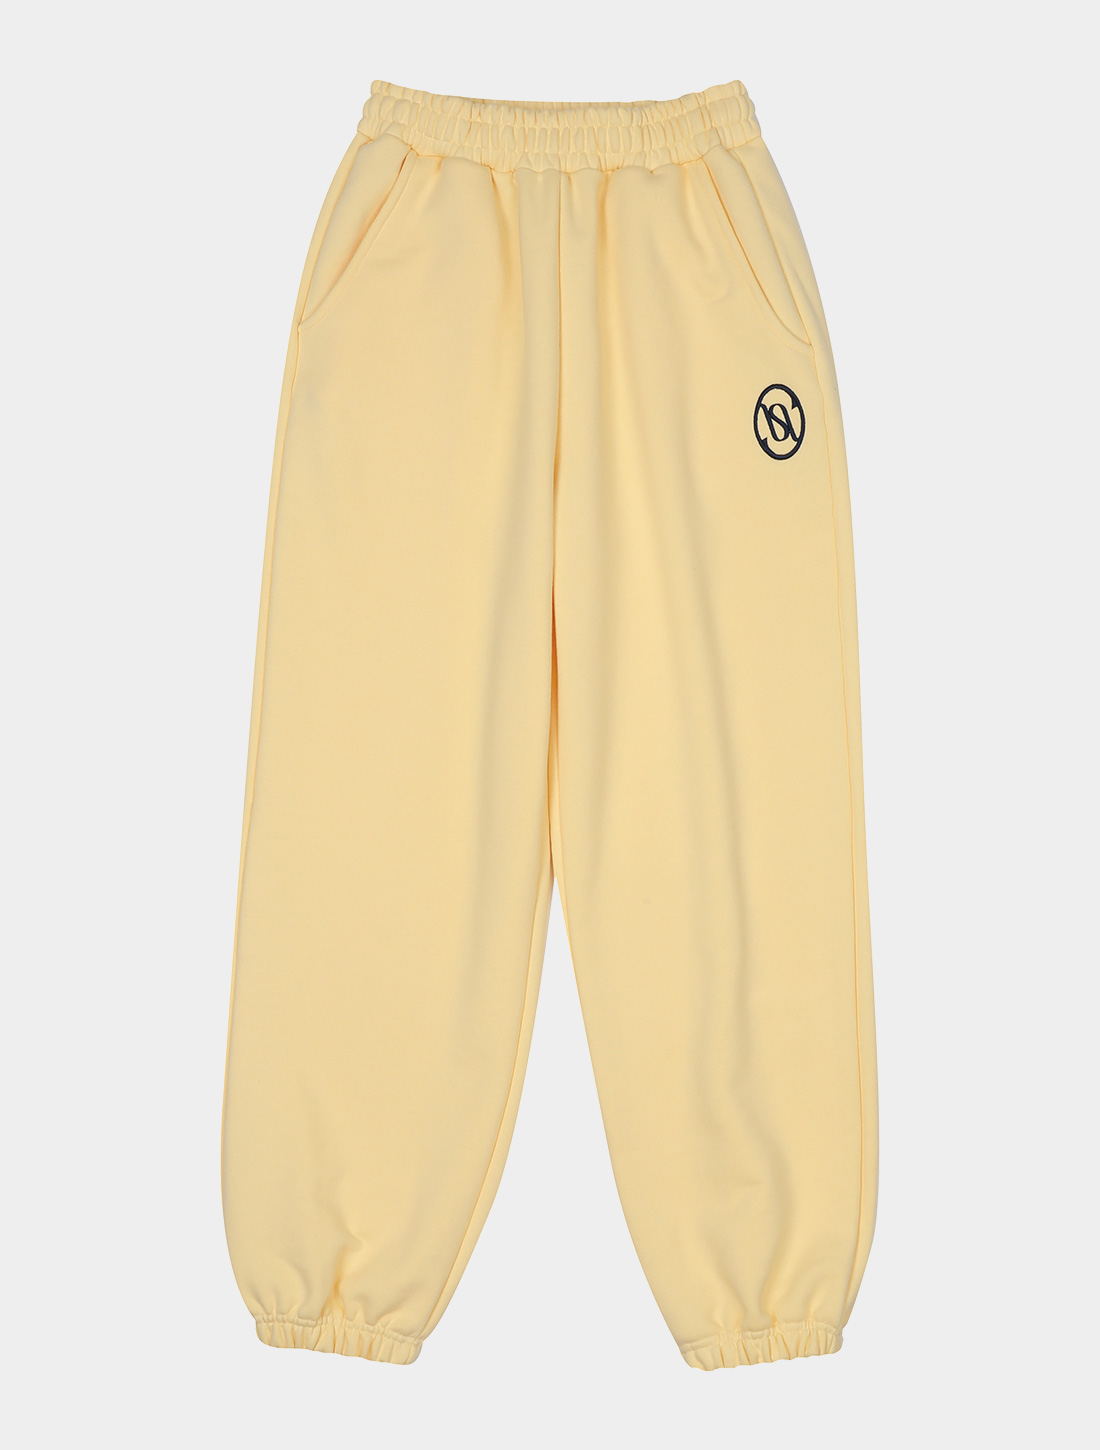 KISY logo jogger pants (pastel yellow)